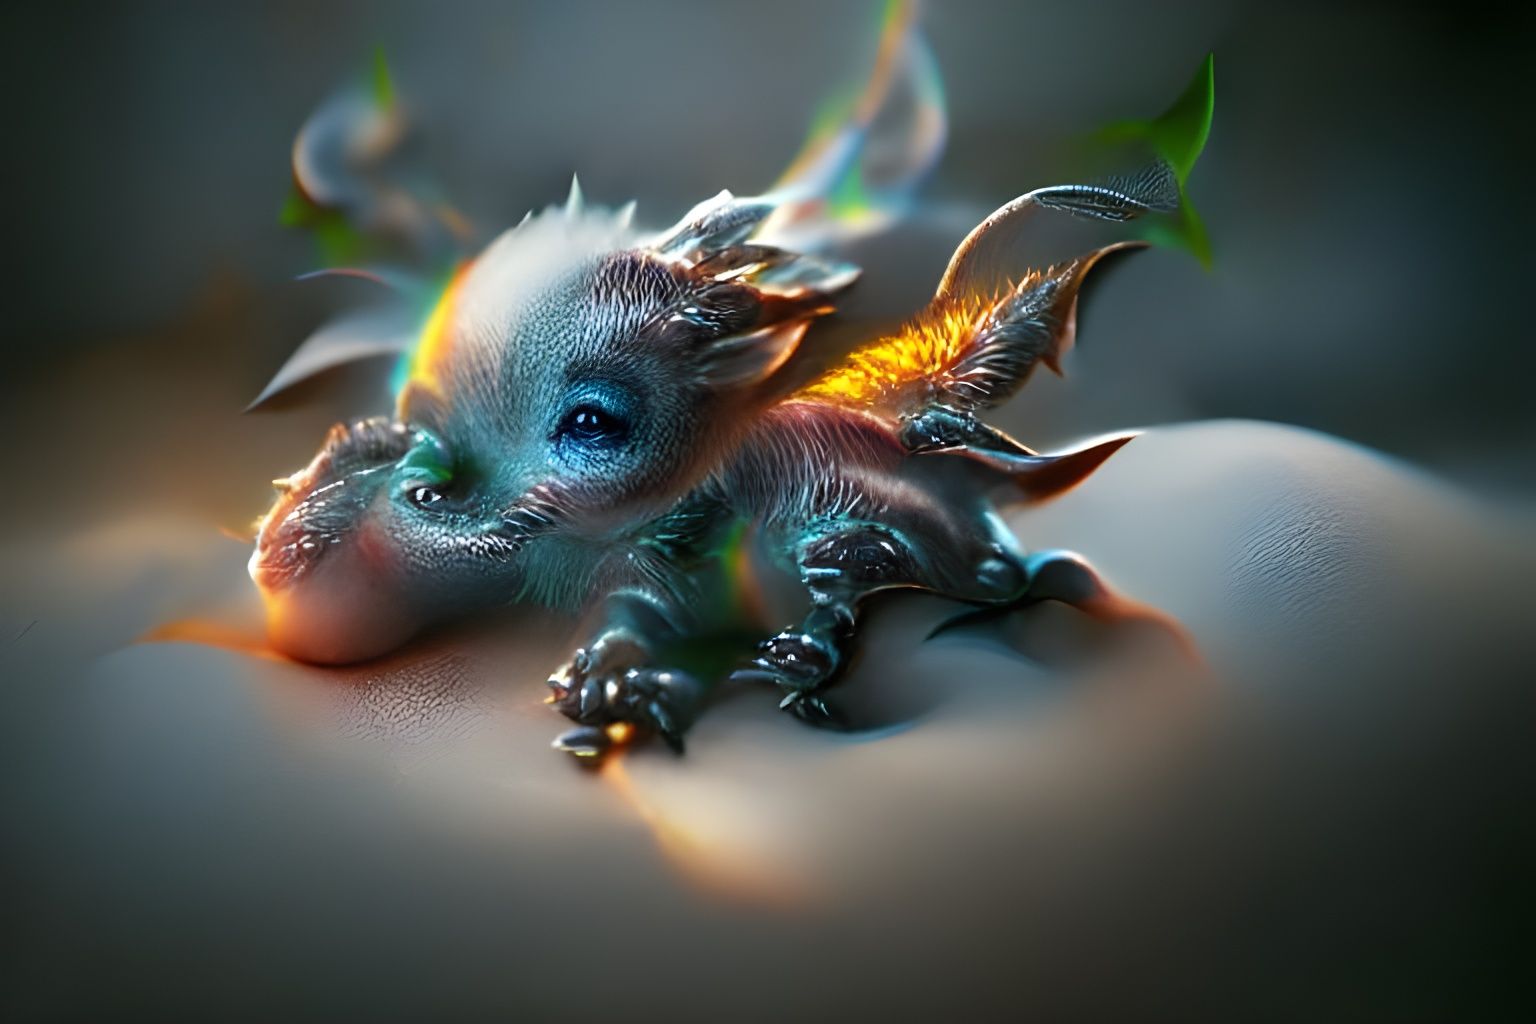 Baby dragon 